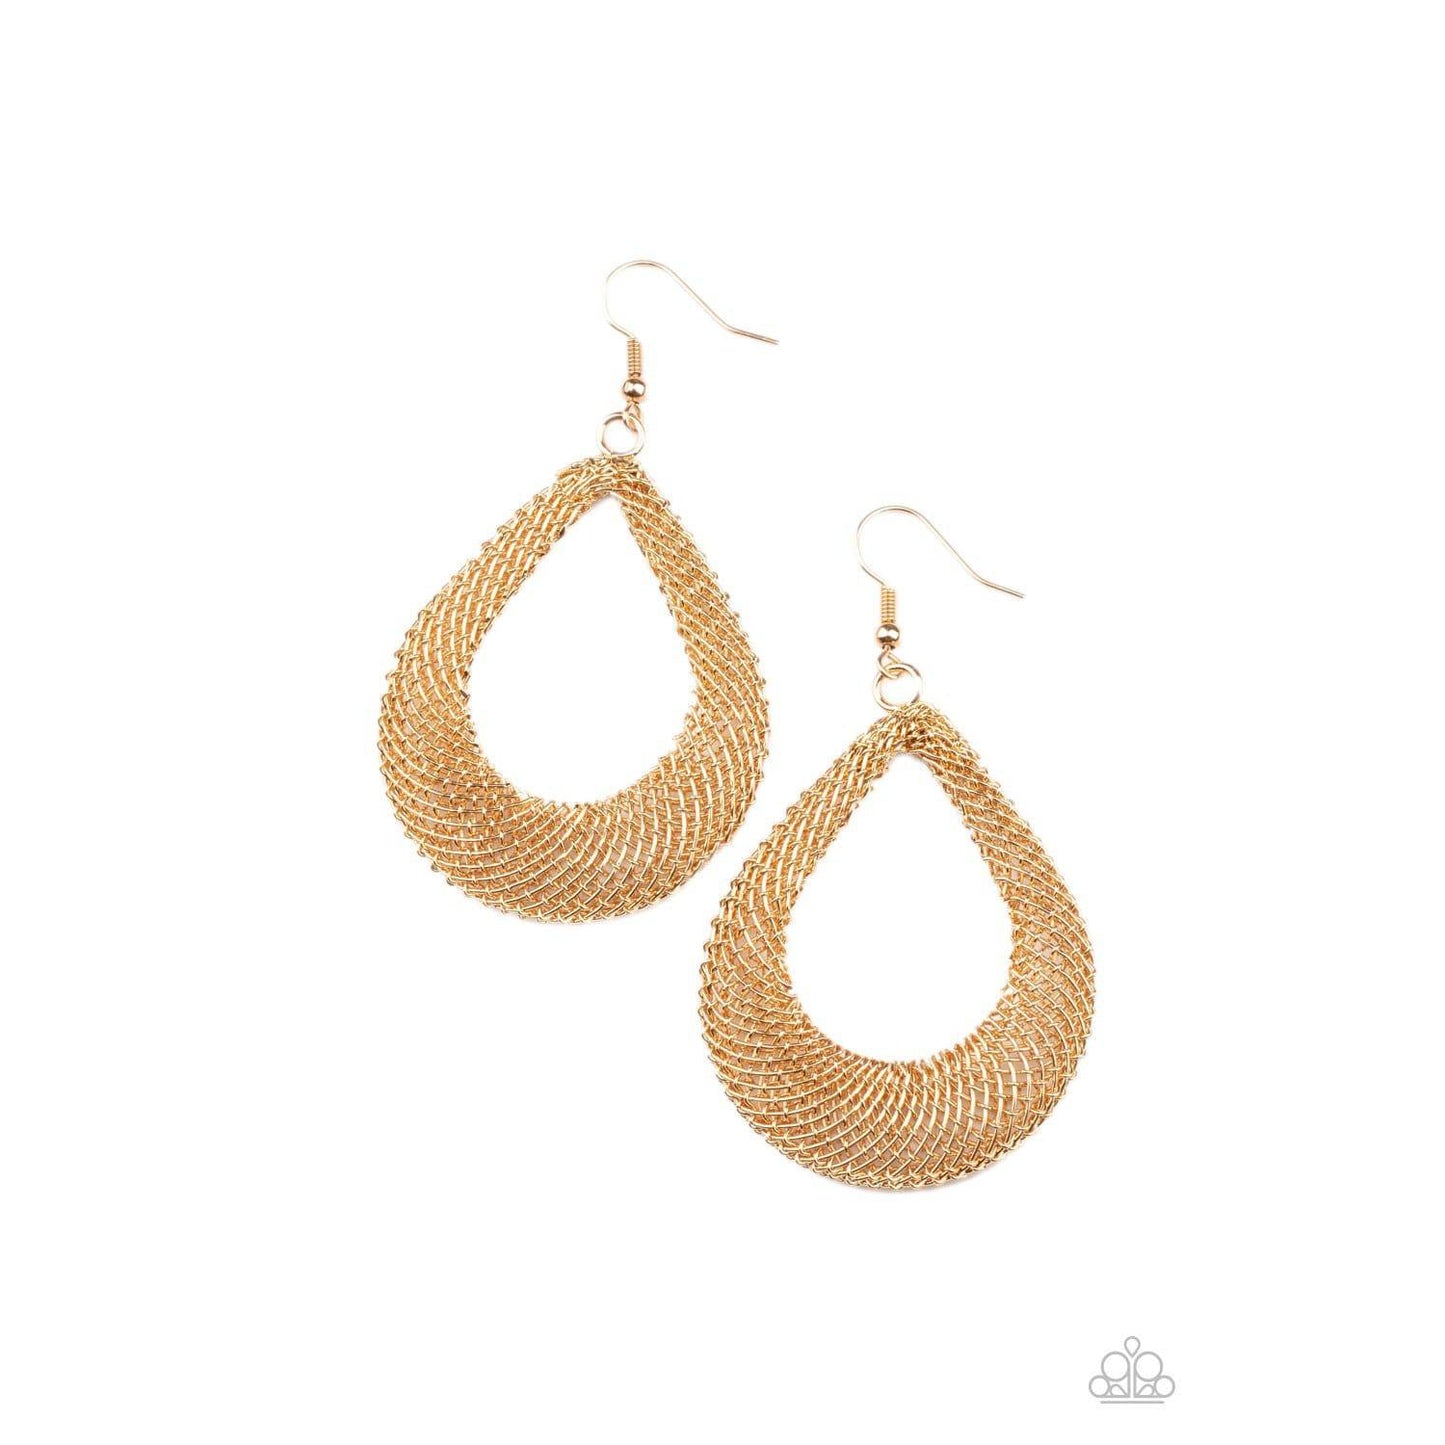 A Hot MESH - Gold Earrings - Paparazzi Accessories - GlaMarous Titi Jewels